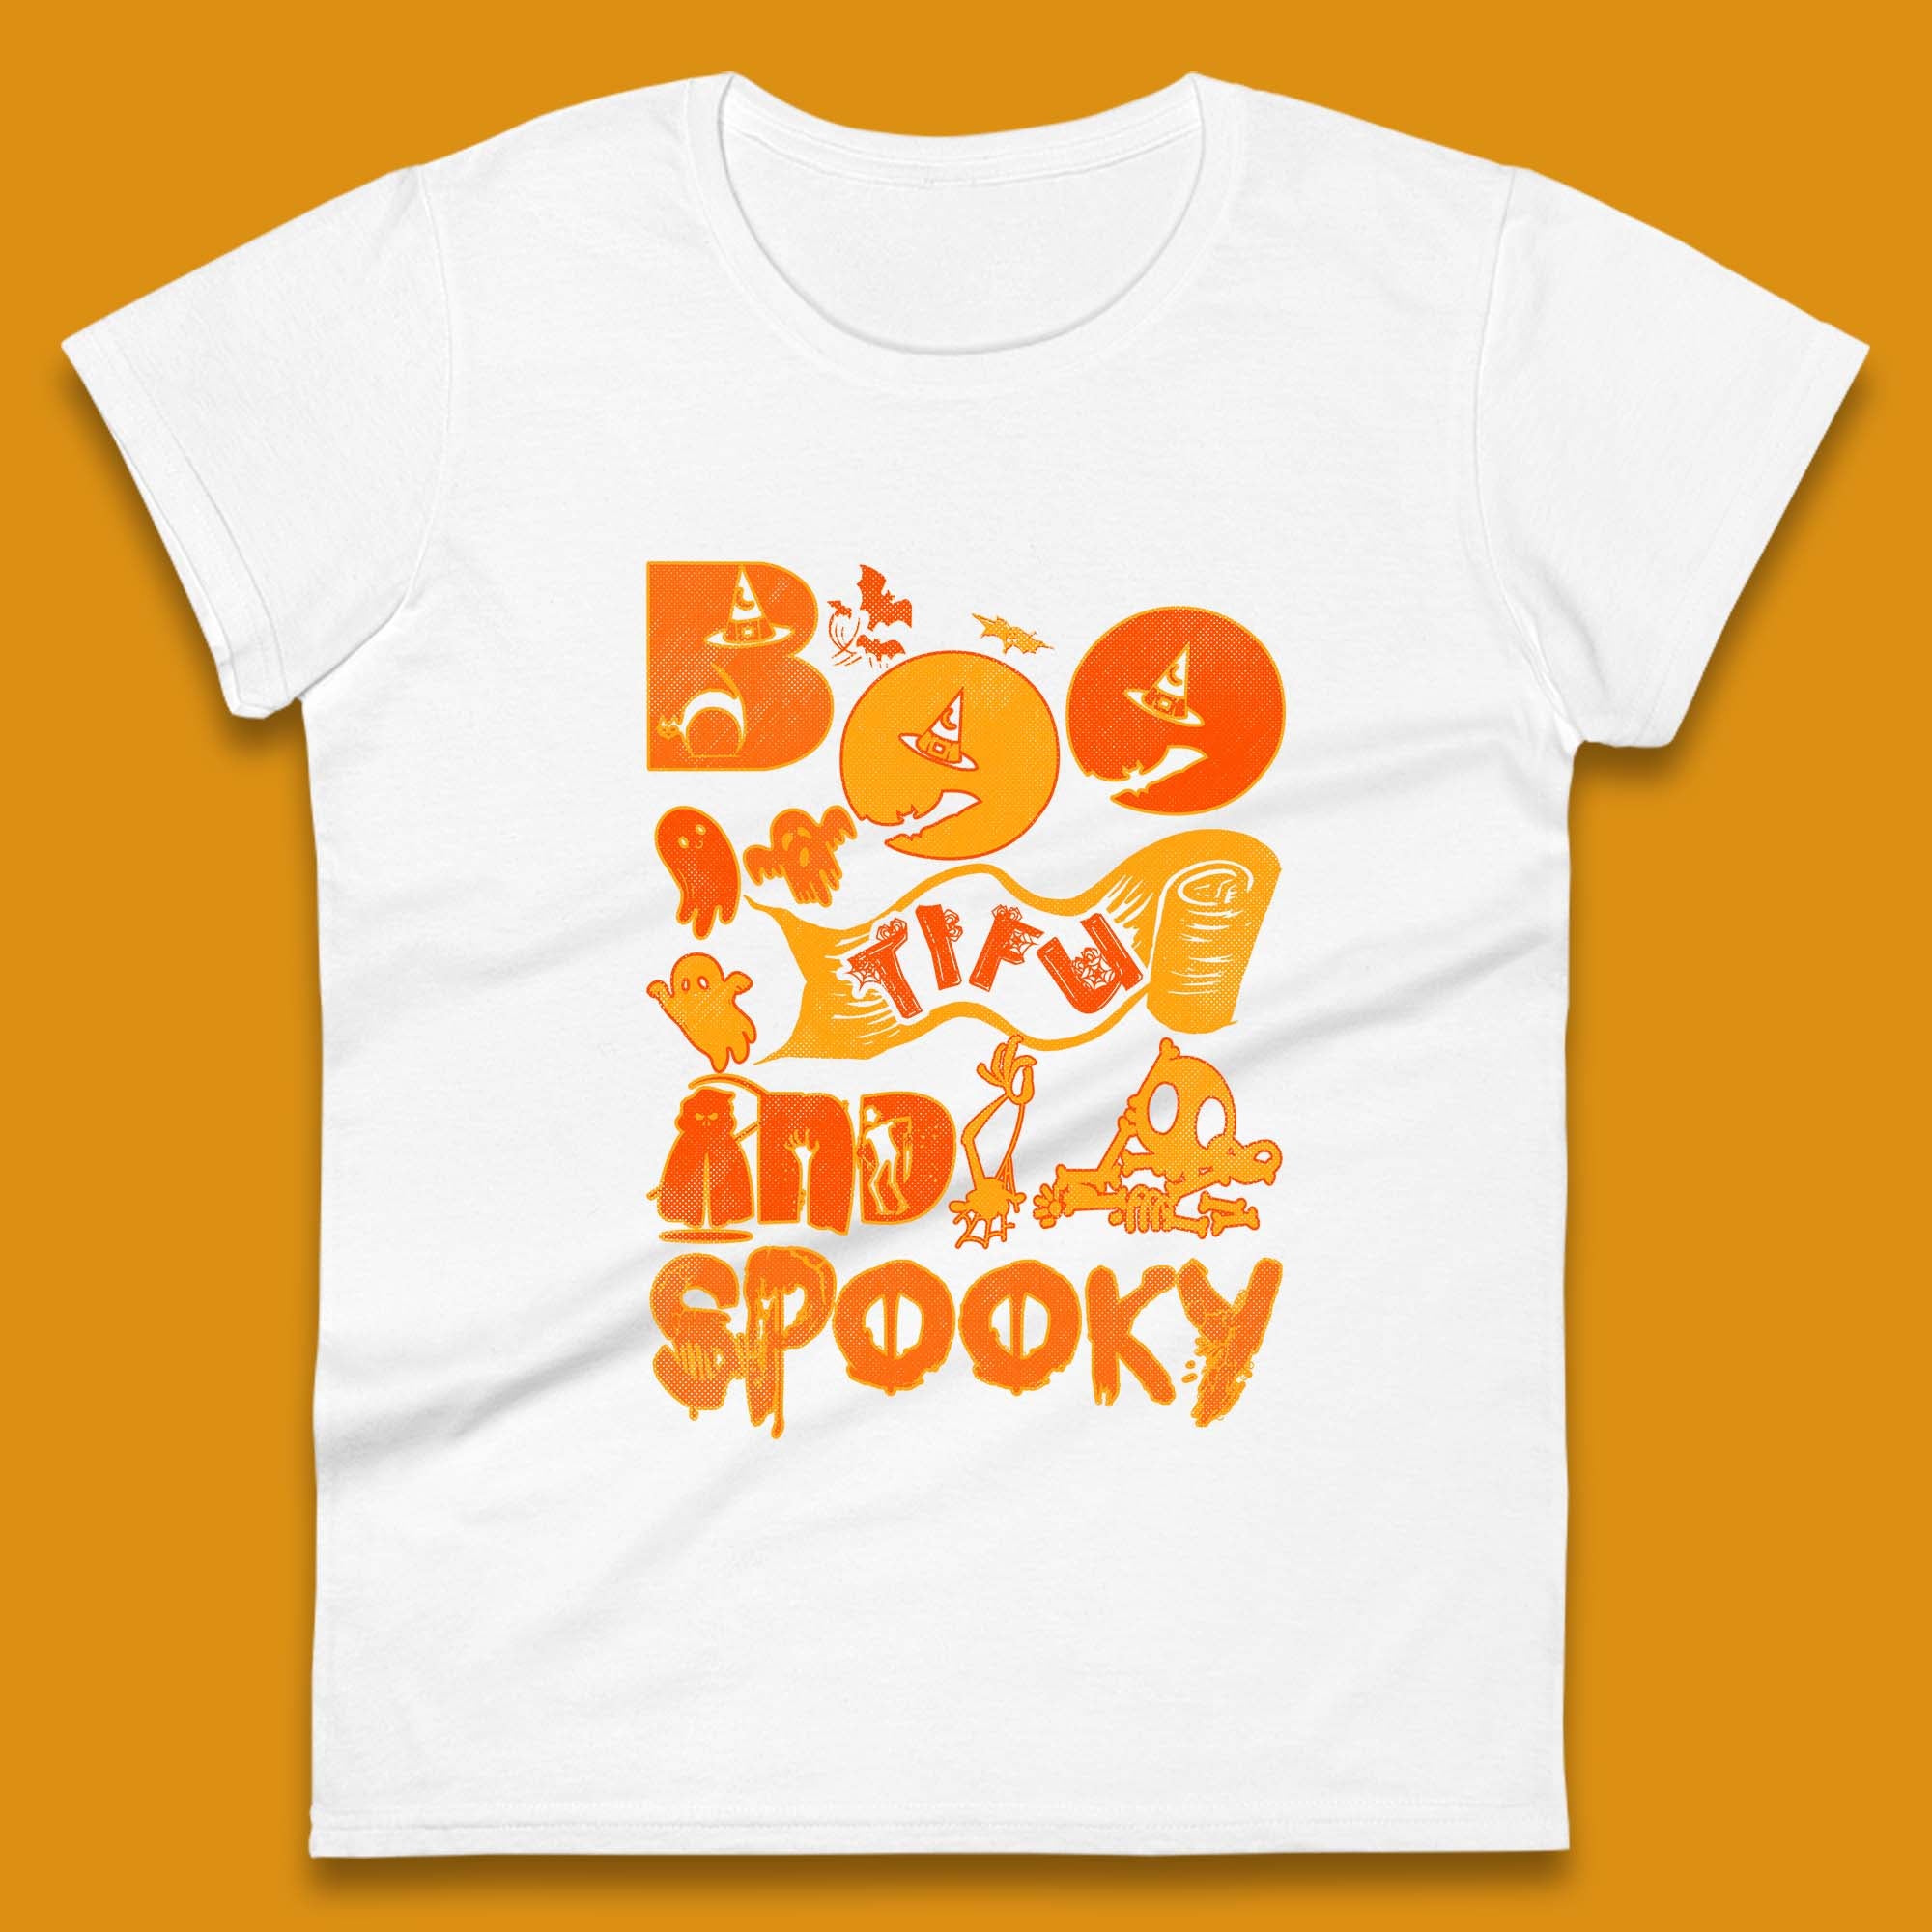 Boo Tiful and Spooky Halloween Horror Scary Boo Ghost Spooky Season Womens Tee Top